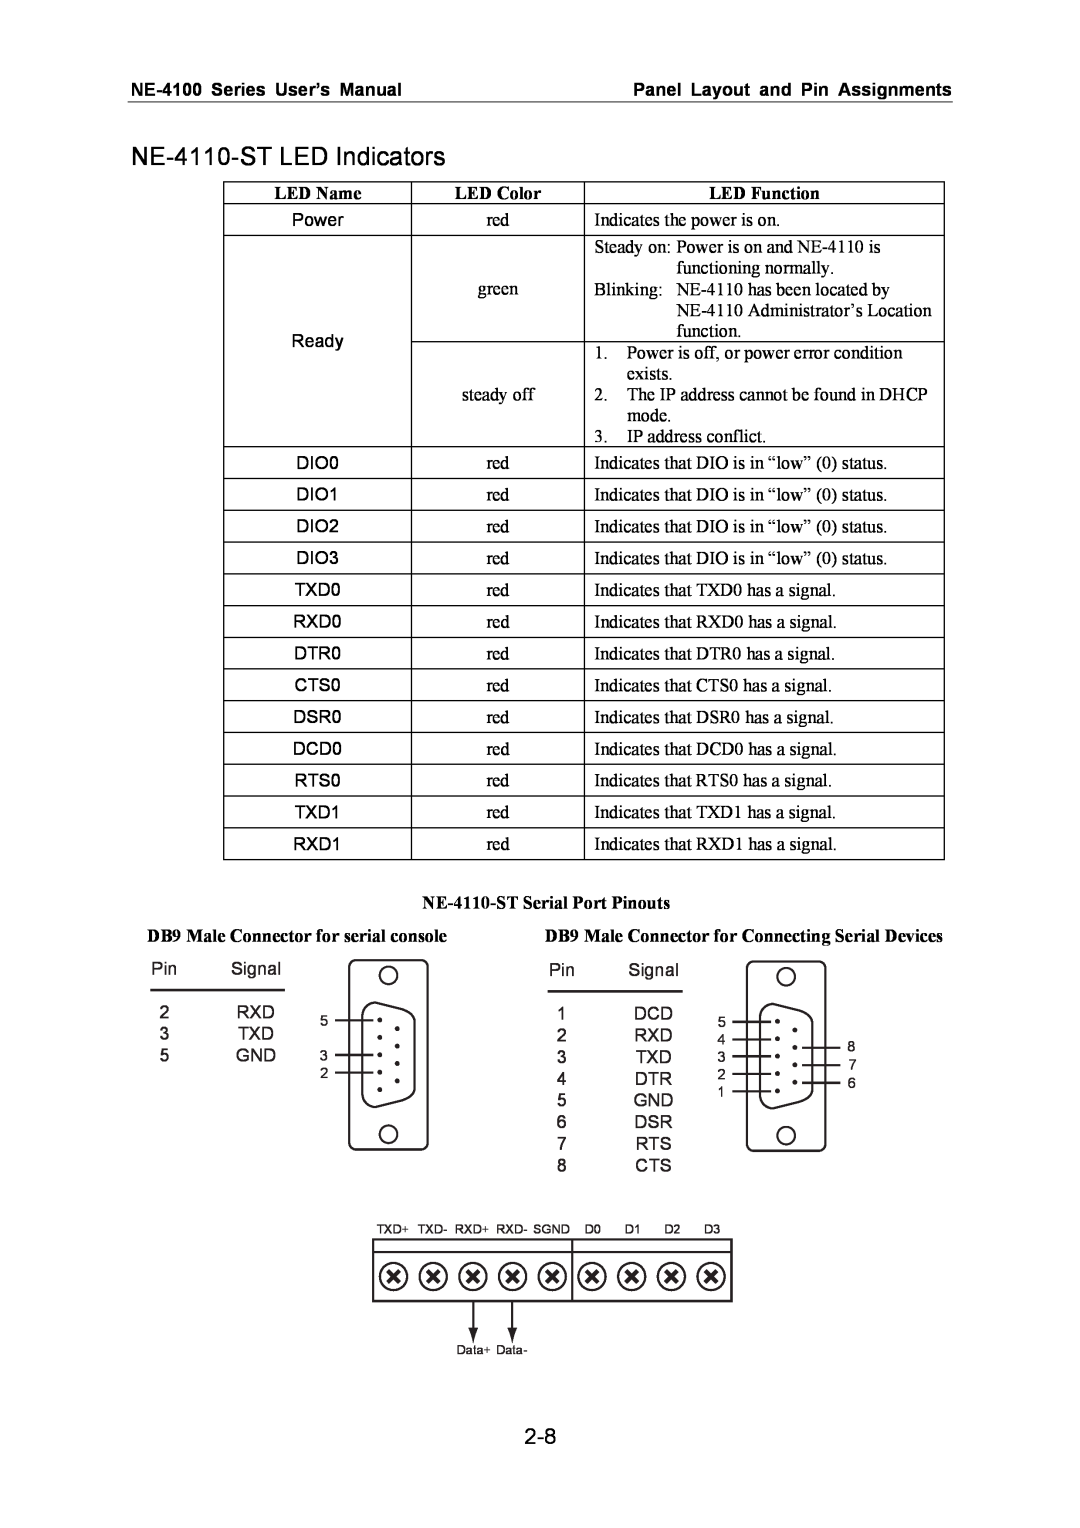 Moxa Technologies NE-4110-ST LED Indicators, NE-4100 Series User’s ManualPanel Layout and Pin Assignments, Signal 